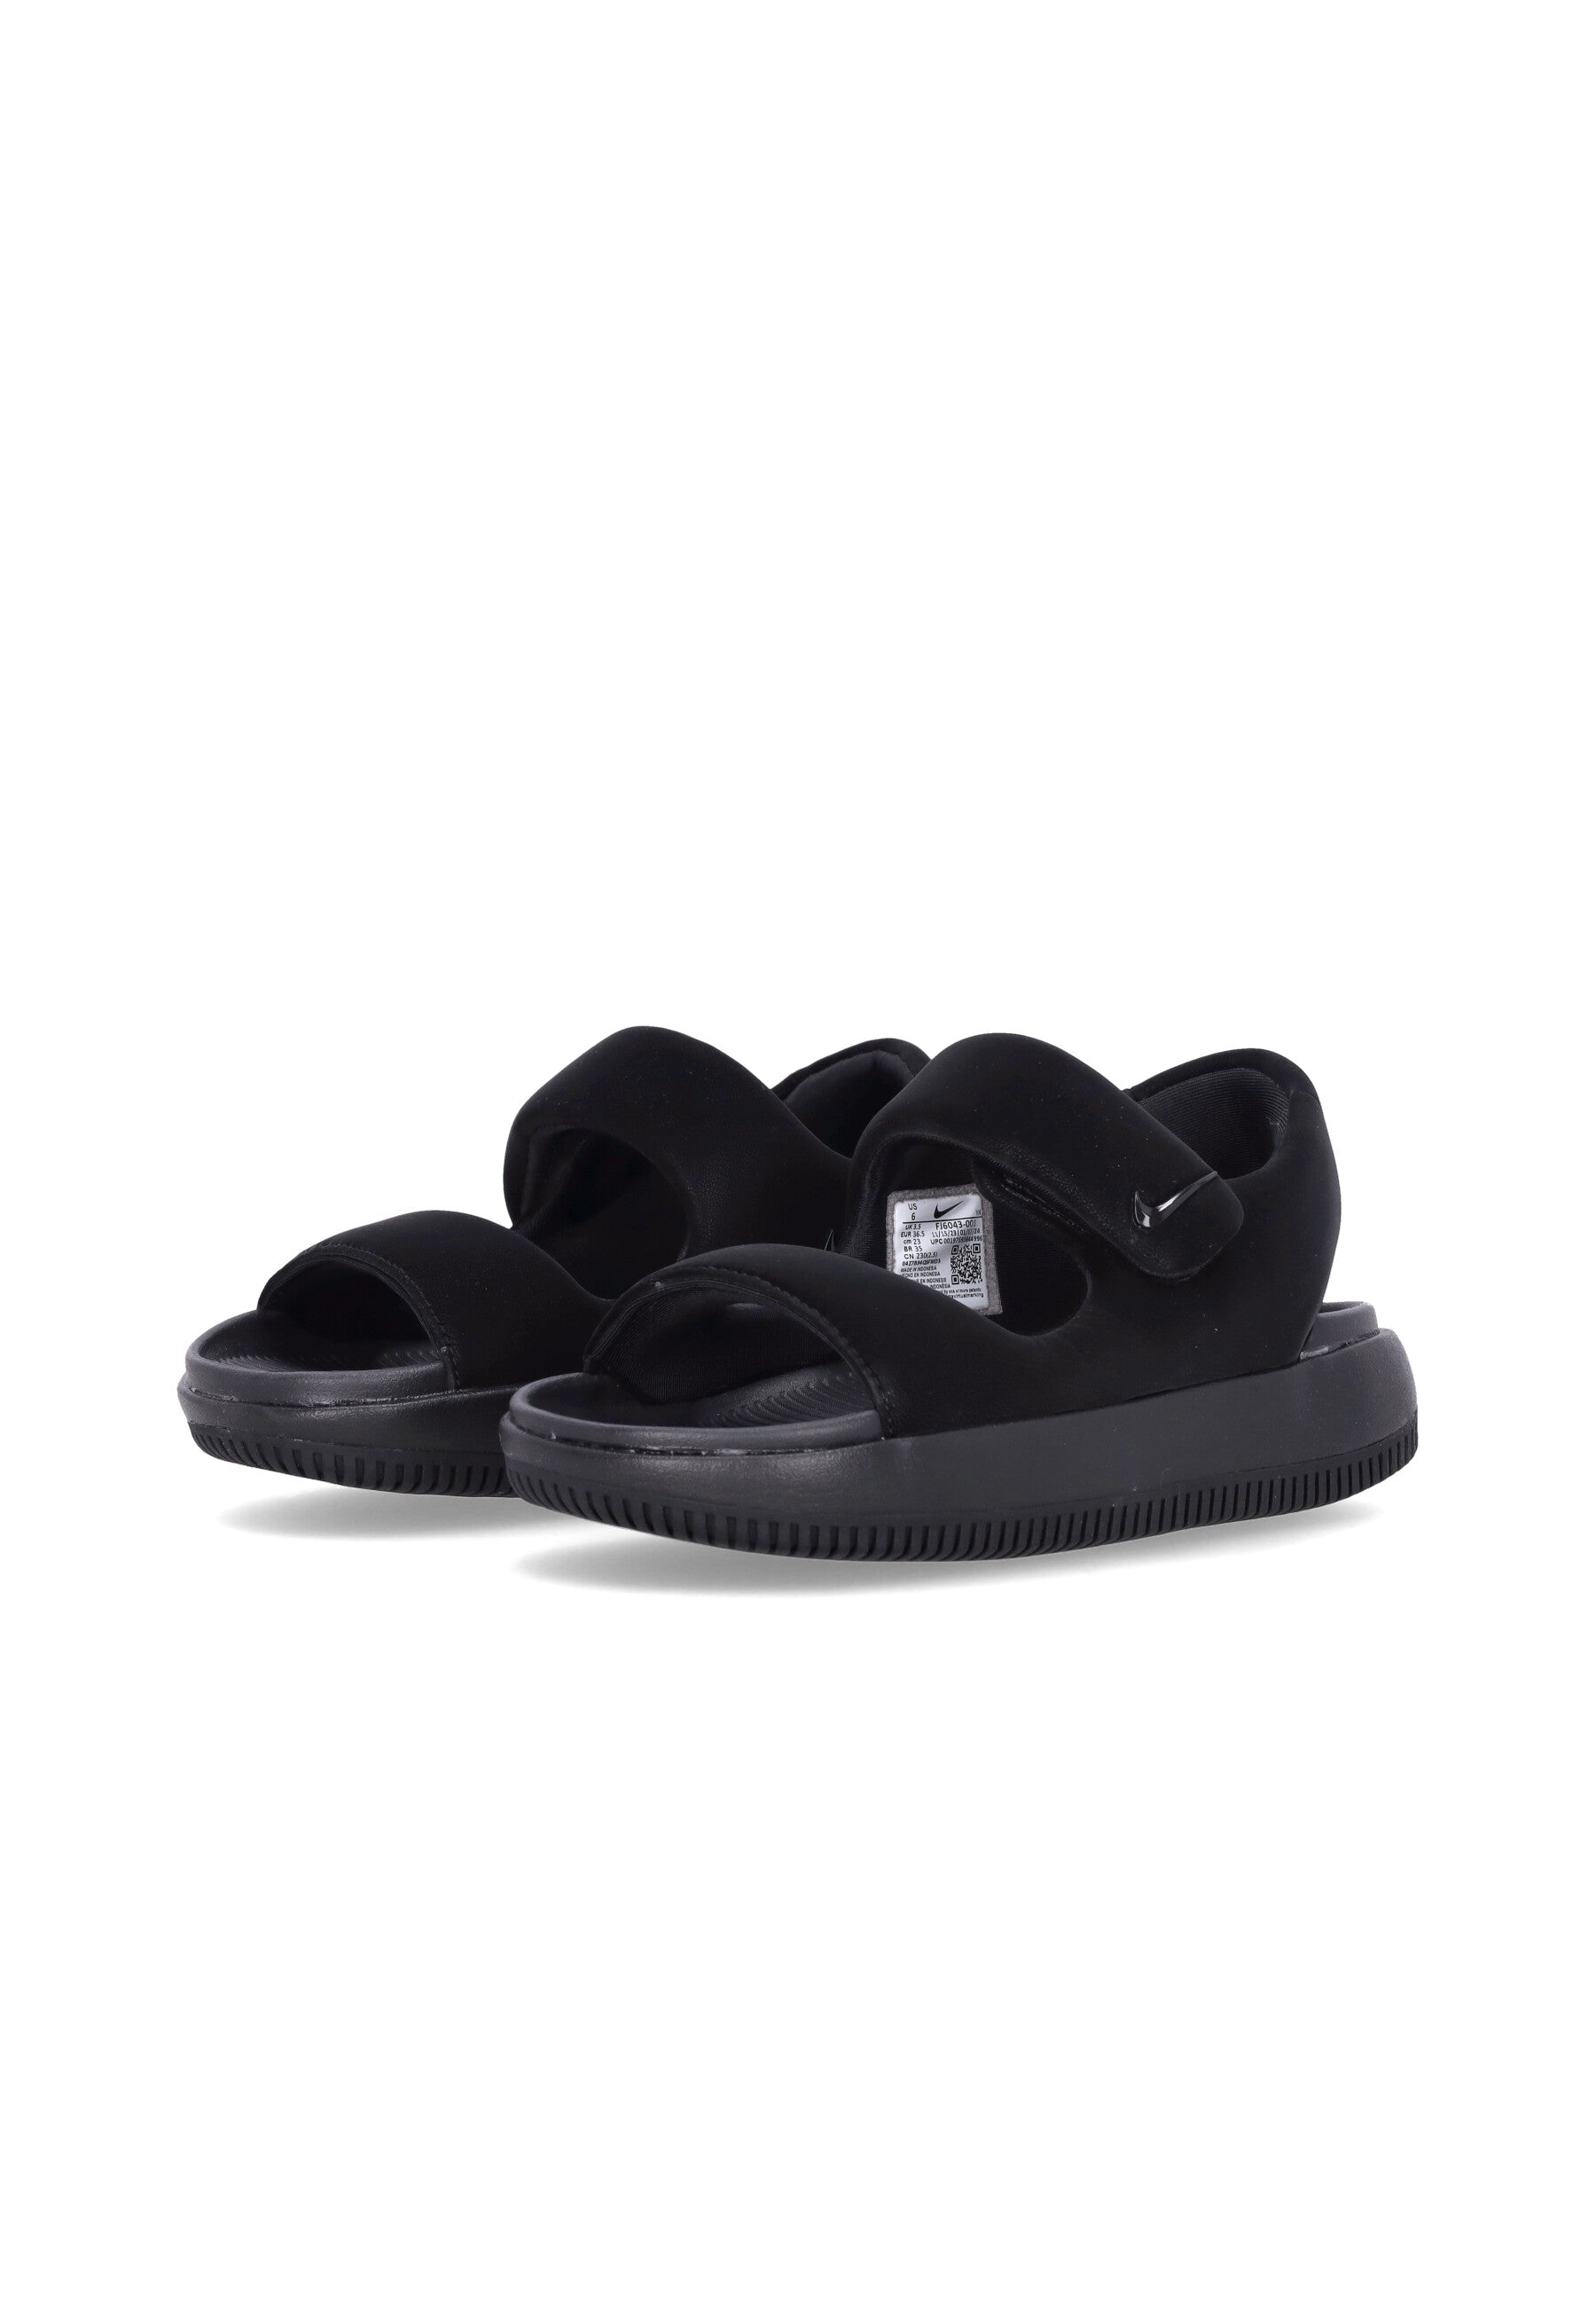 Sandalo Donna W Calm Sandal Black/black/black FJ6043-001